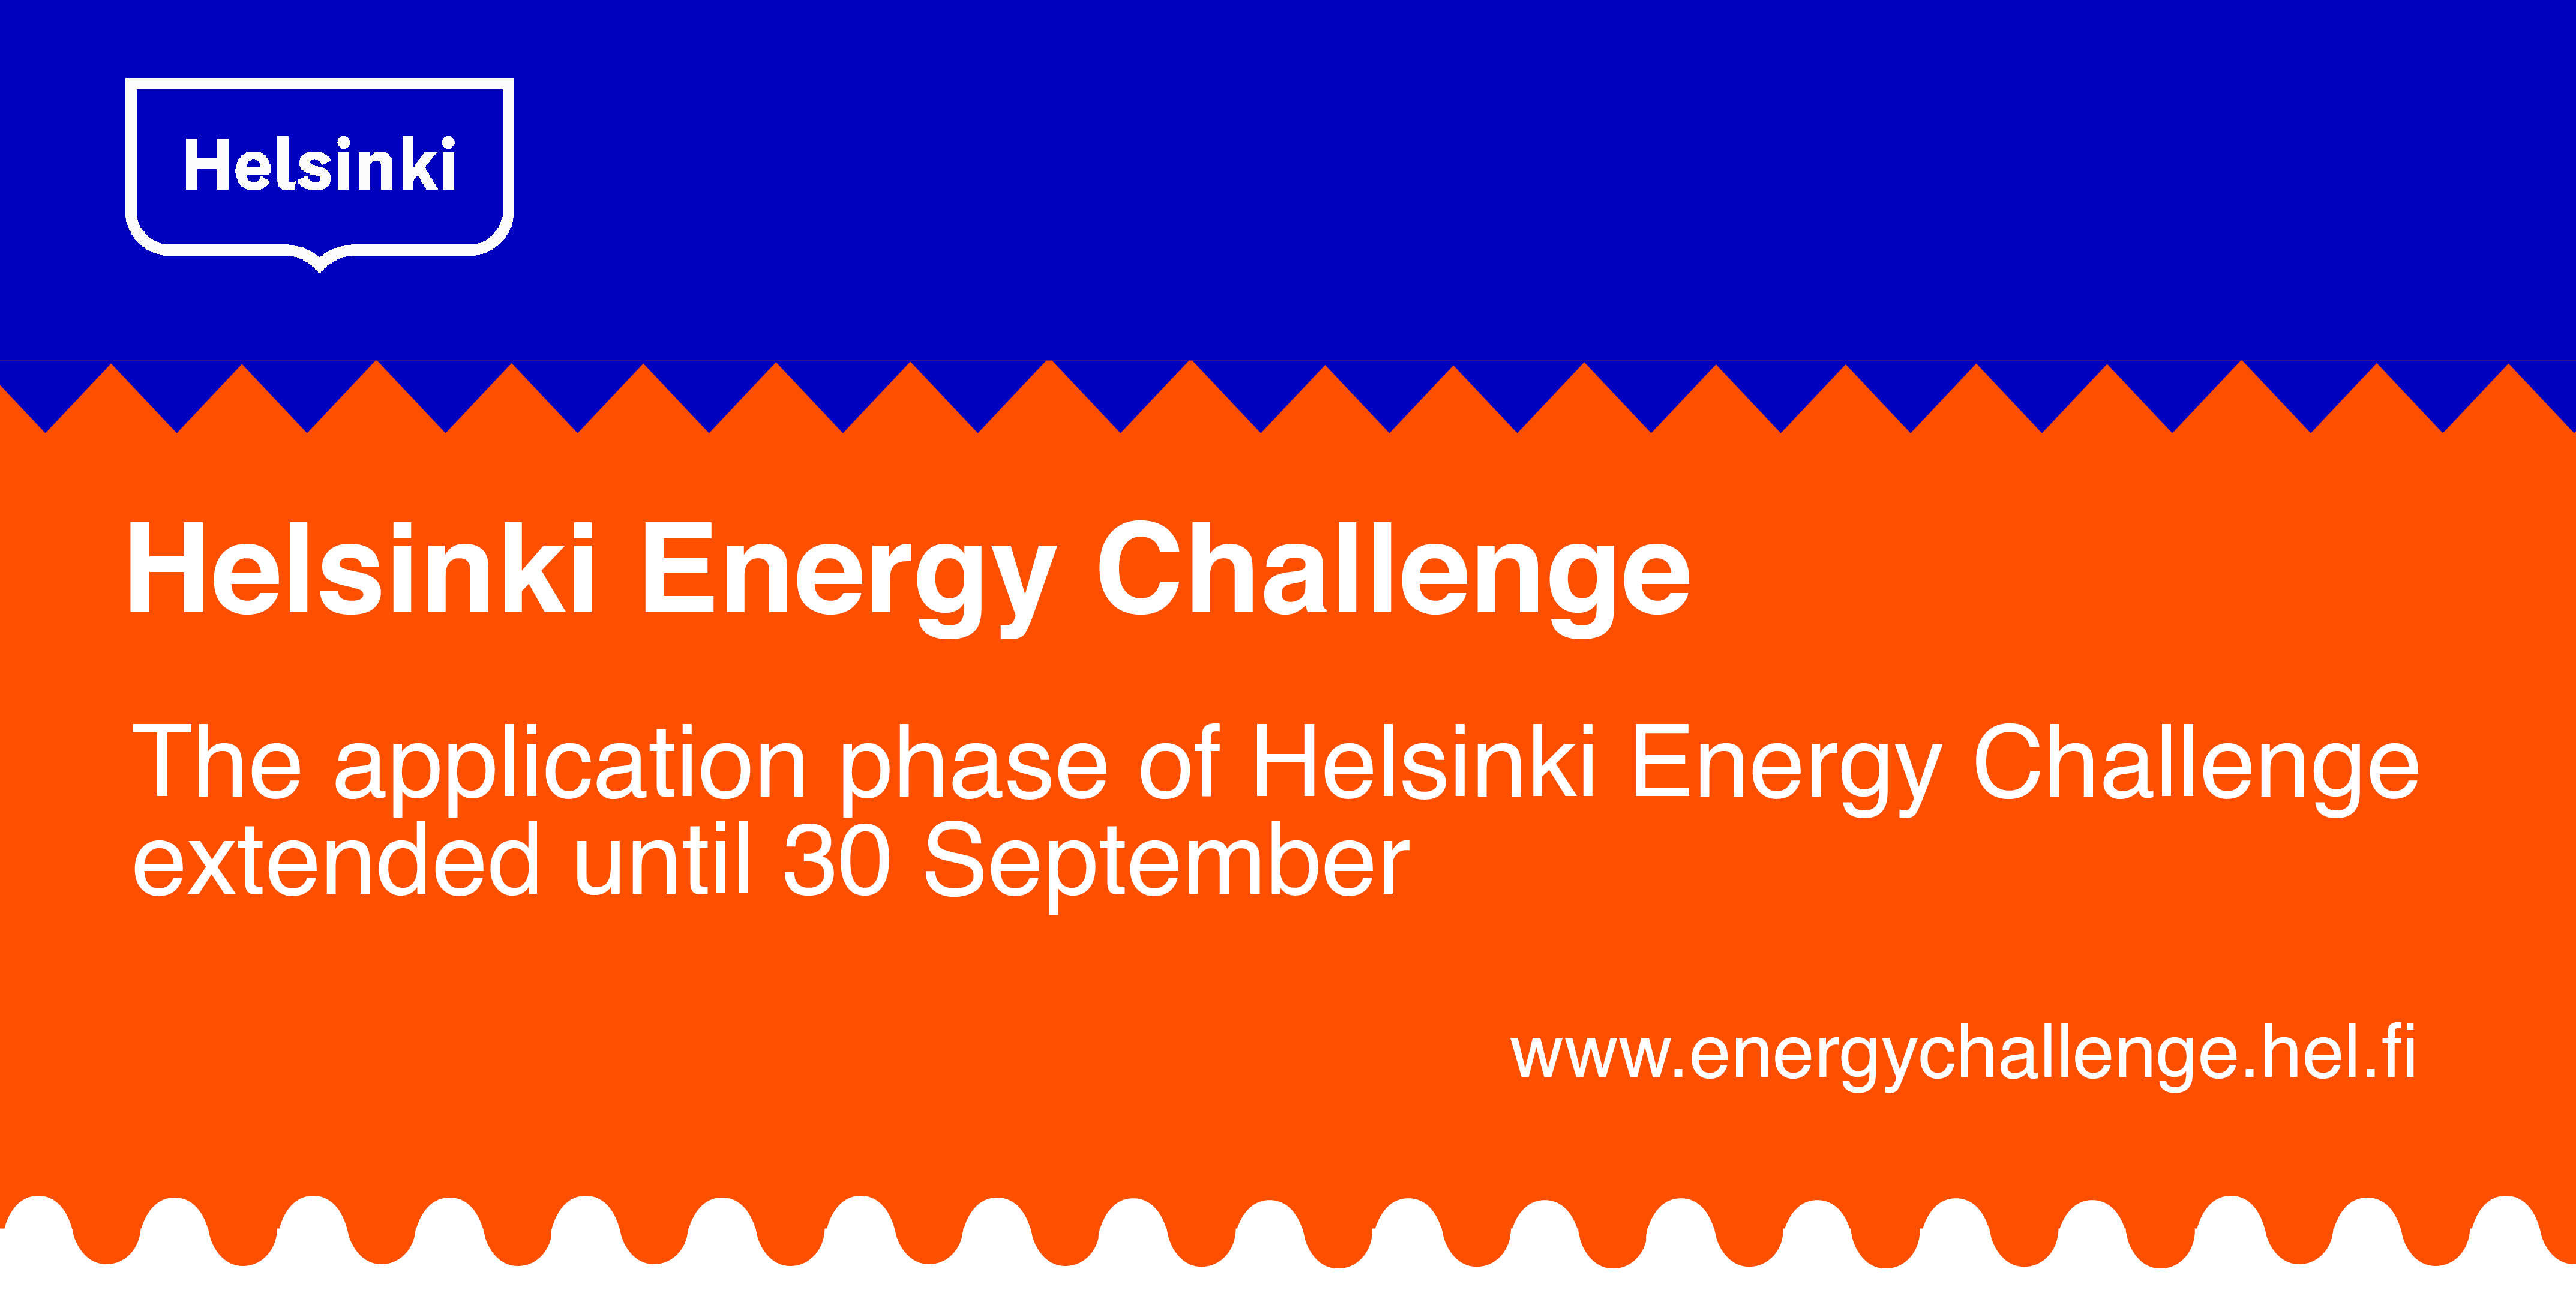 Helsinki Energy challenge / The application phase of Helsinki Energy Challenge extended until 30 September